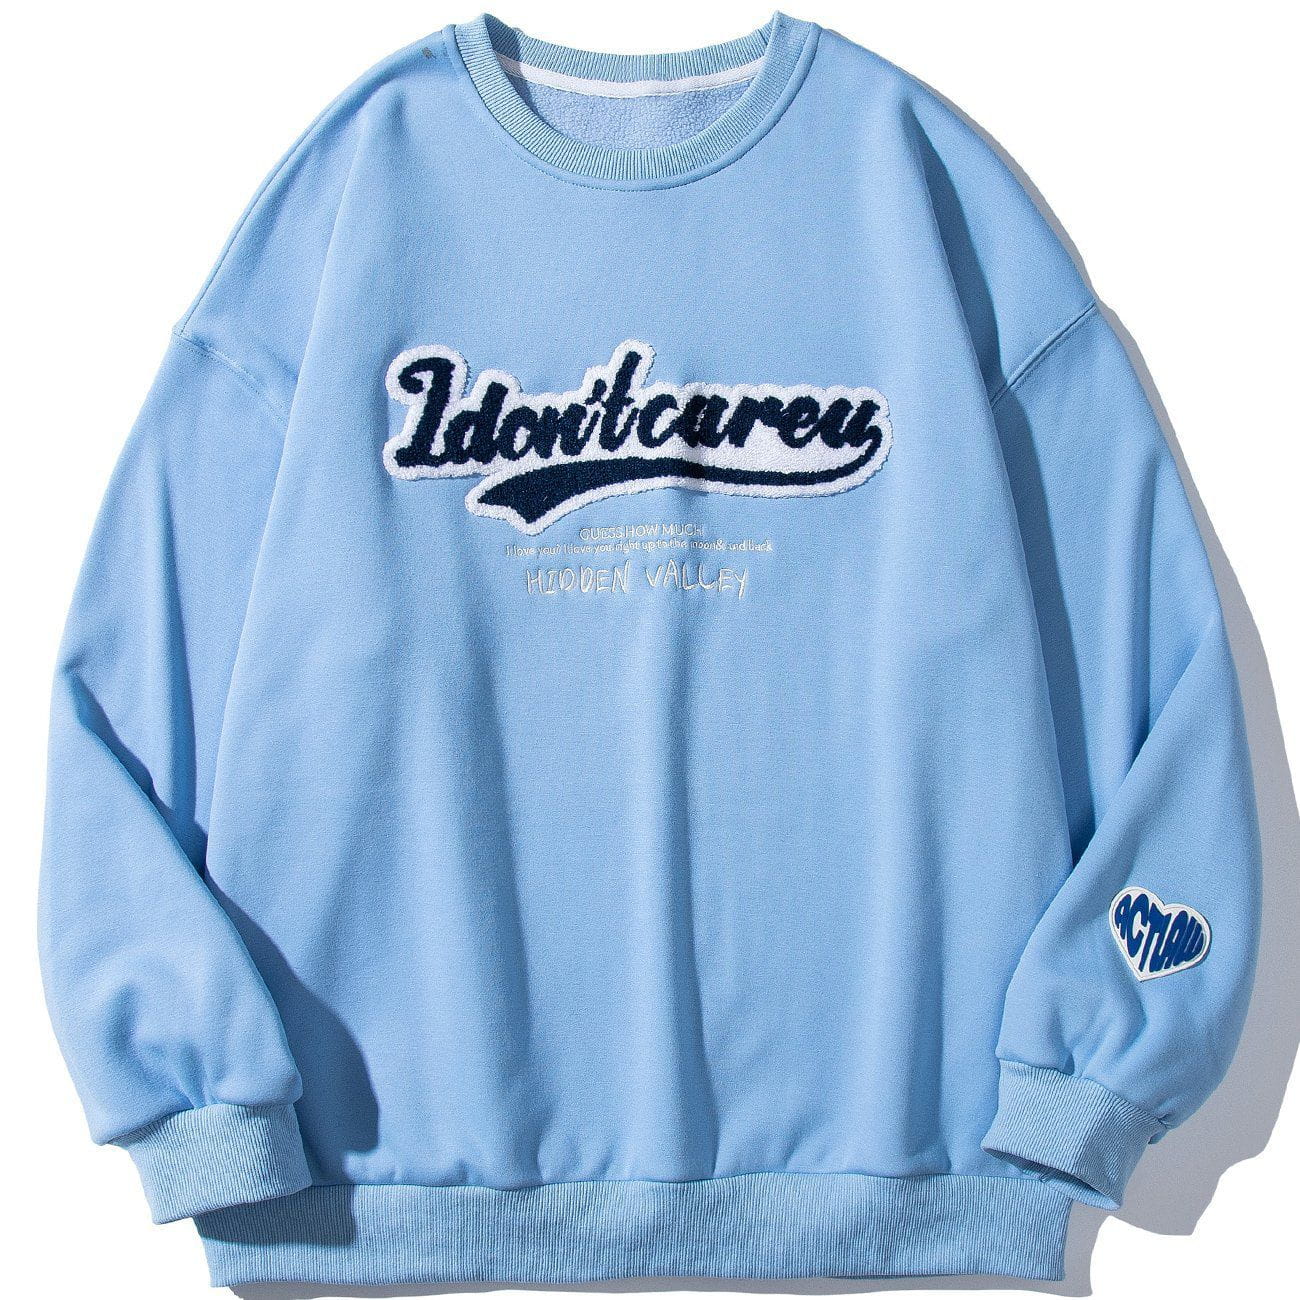 LUXENFY™ - Letter Flocked Sweatshirt luxenfy.com